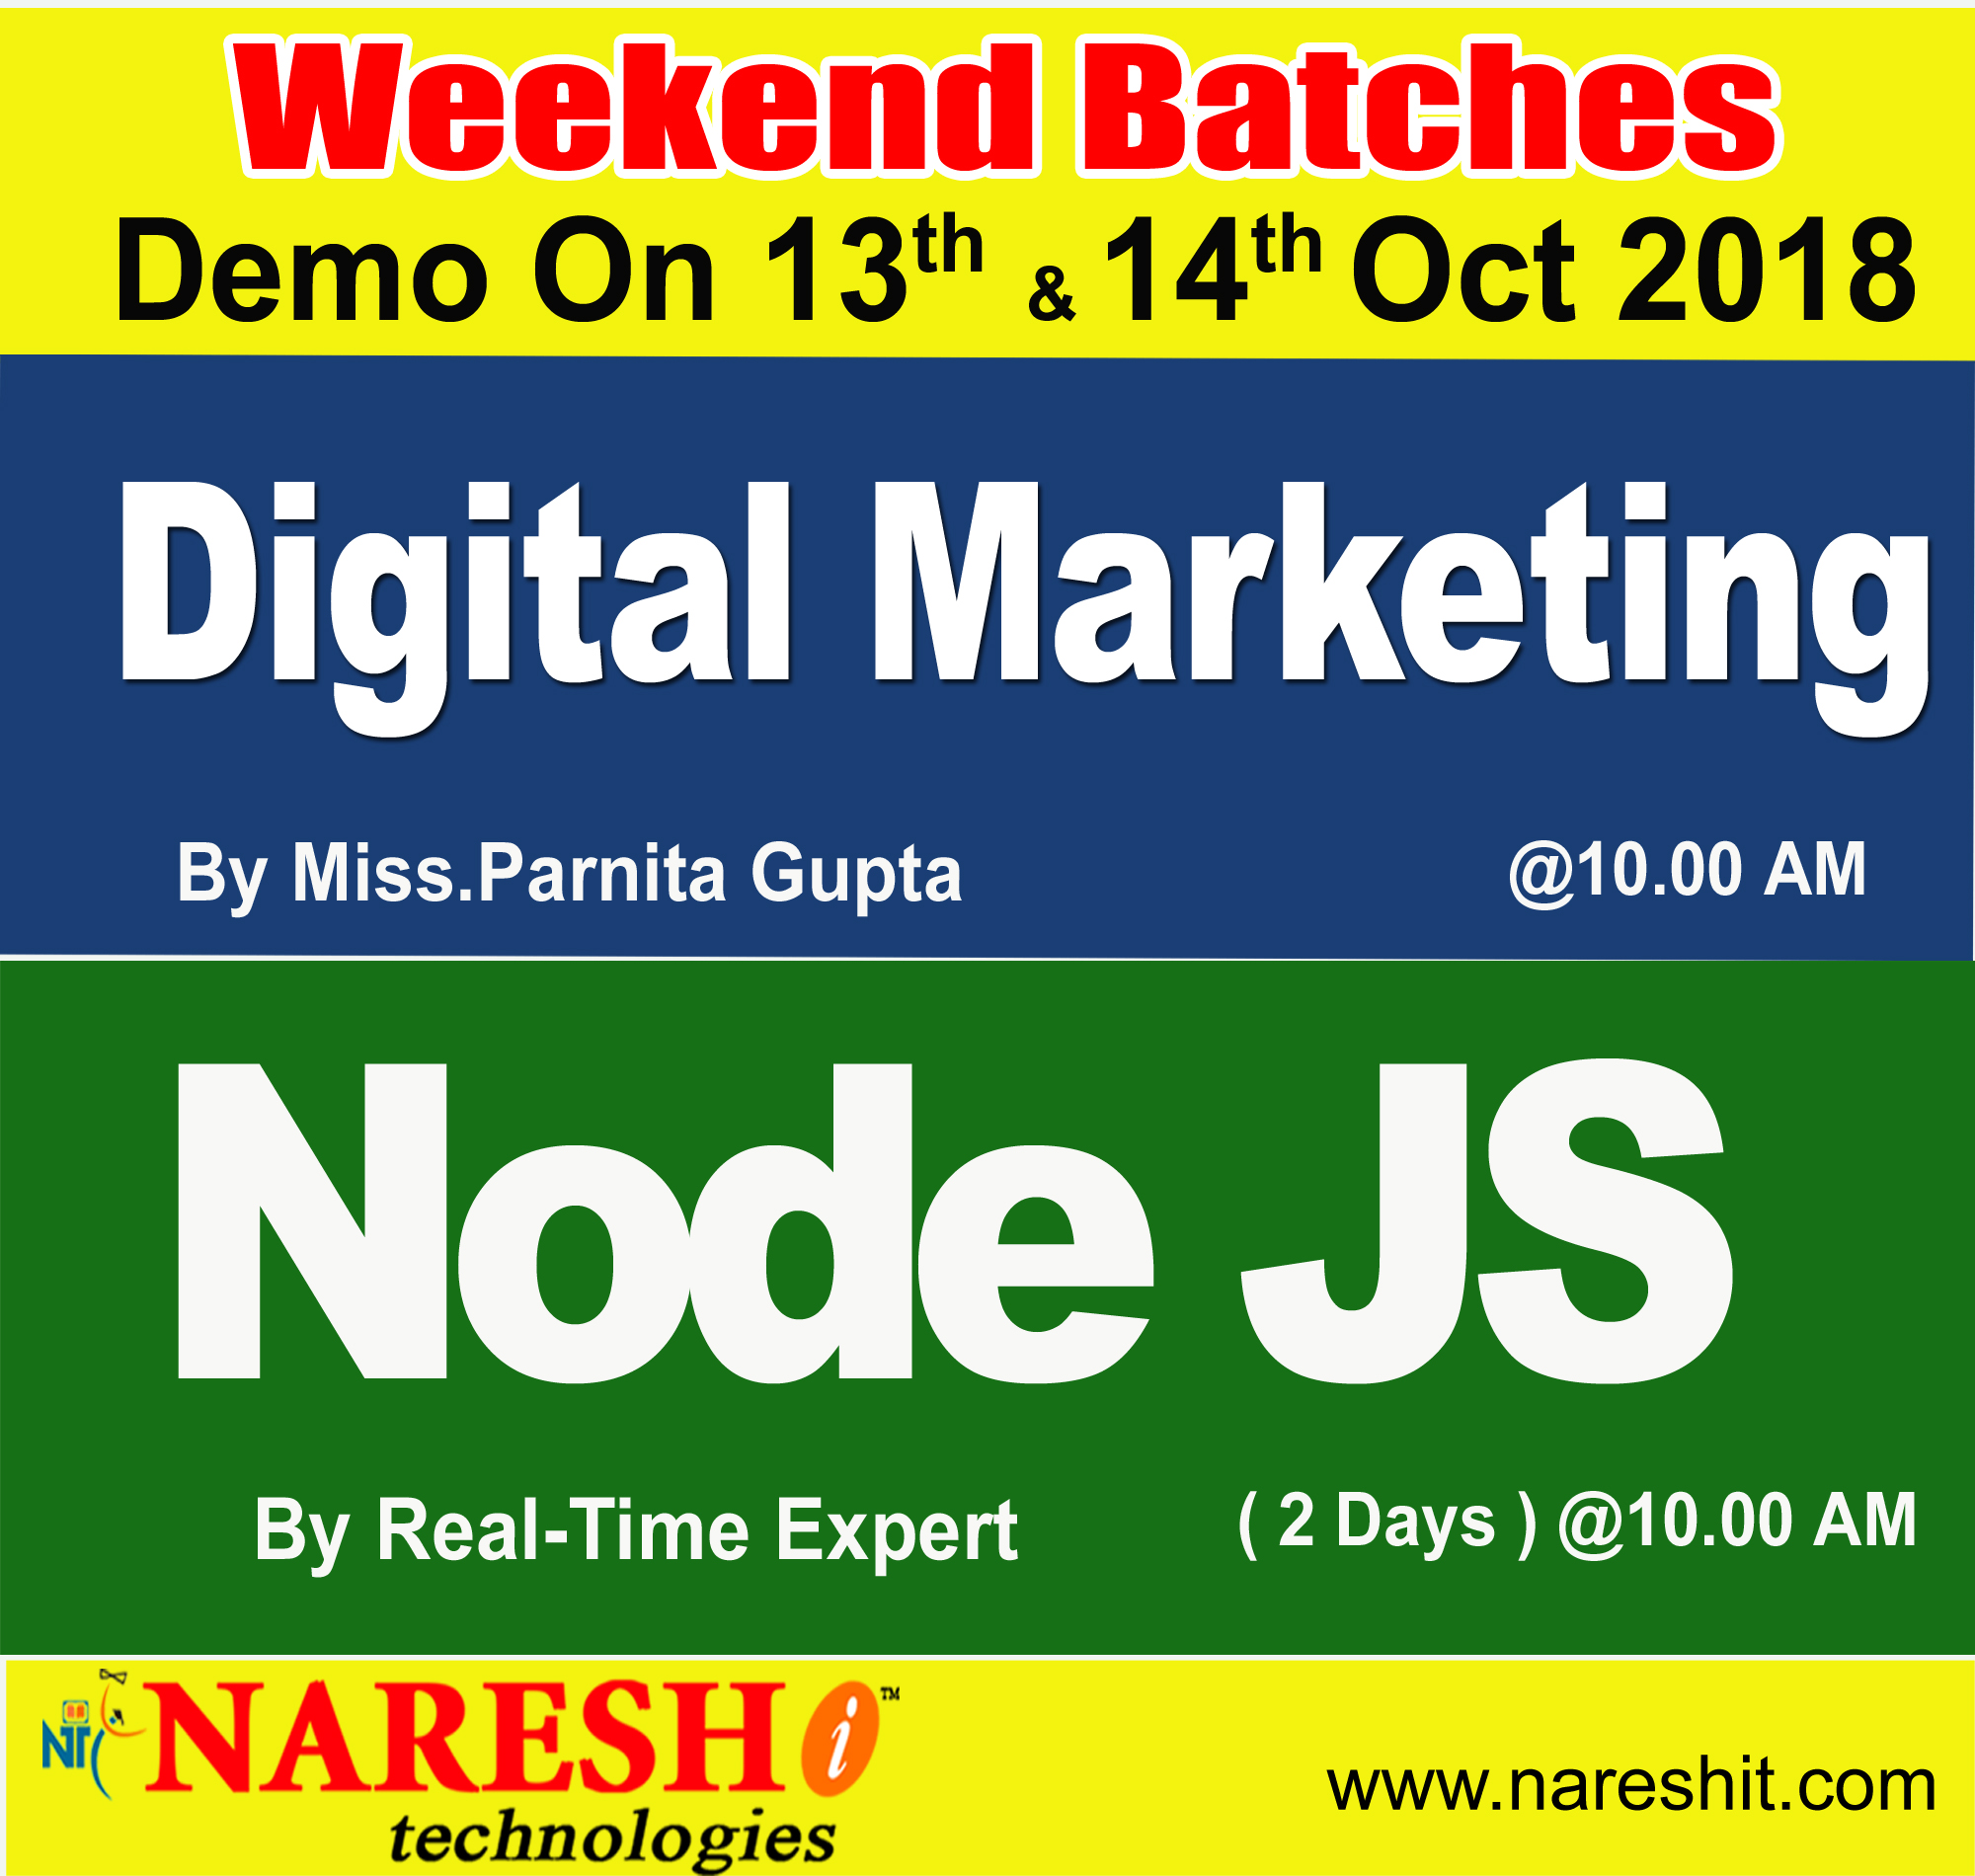 Digital Marketing and NodeJS Weekend Training in Hyderabad - NareshIT, Hyderabad, Andhra Pradesh, India